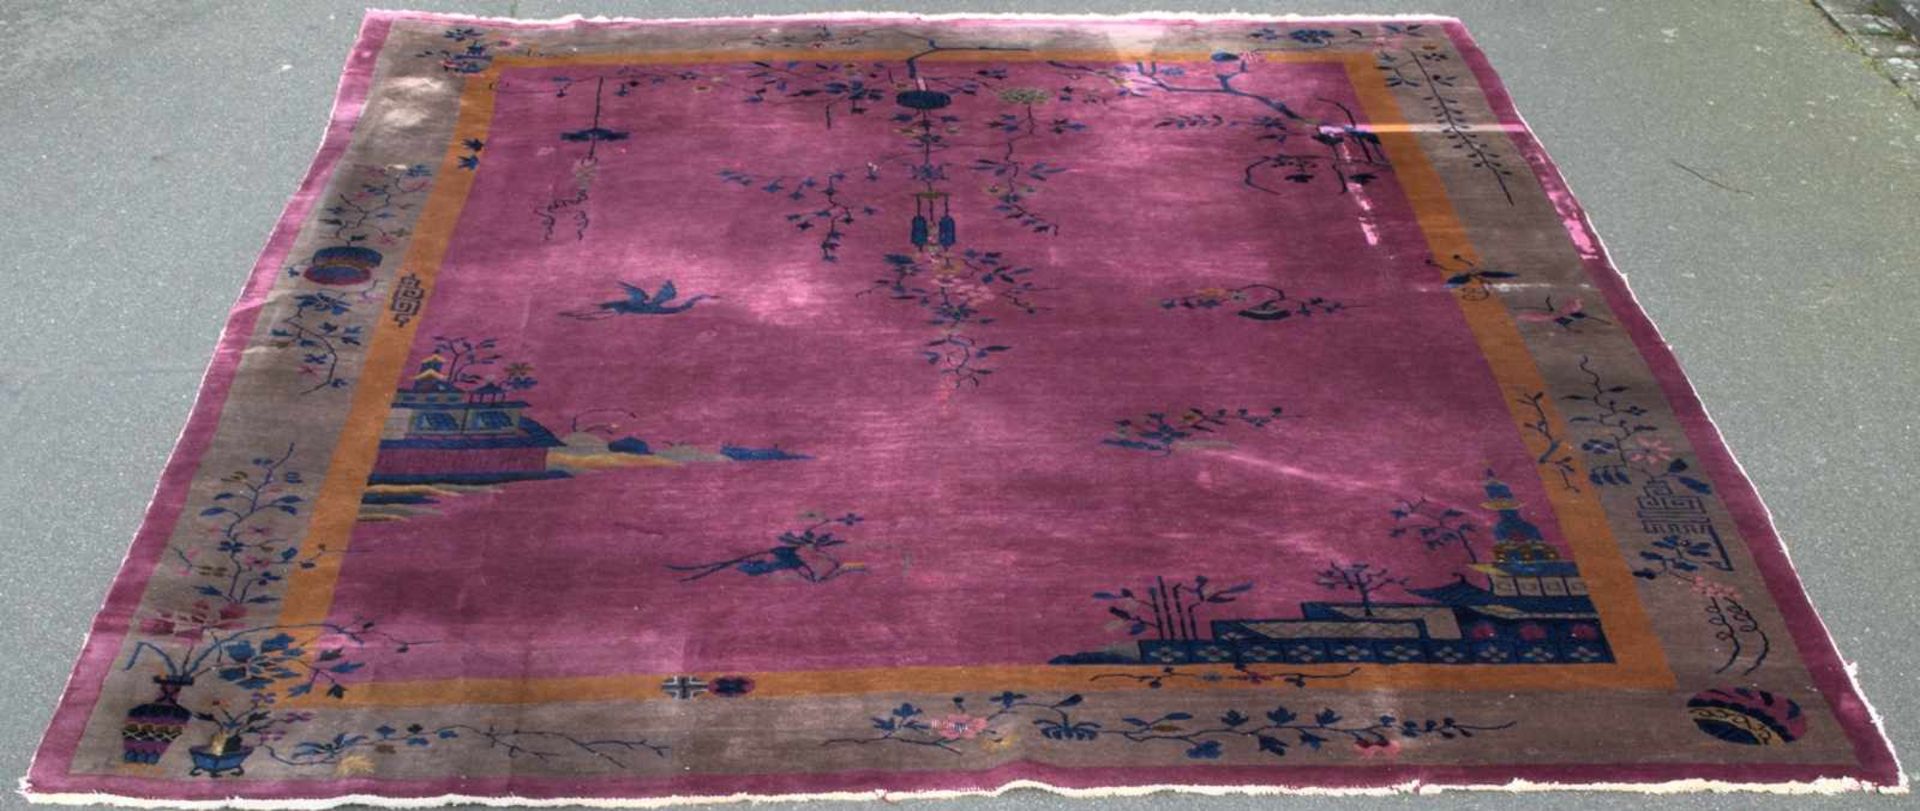 Älterer China-Teppich, ca. 270 x 345 cm, wohl 1. Hälfte 20. Jhd., lilafarbender Teppich mit - Image 7 of 12